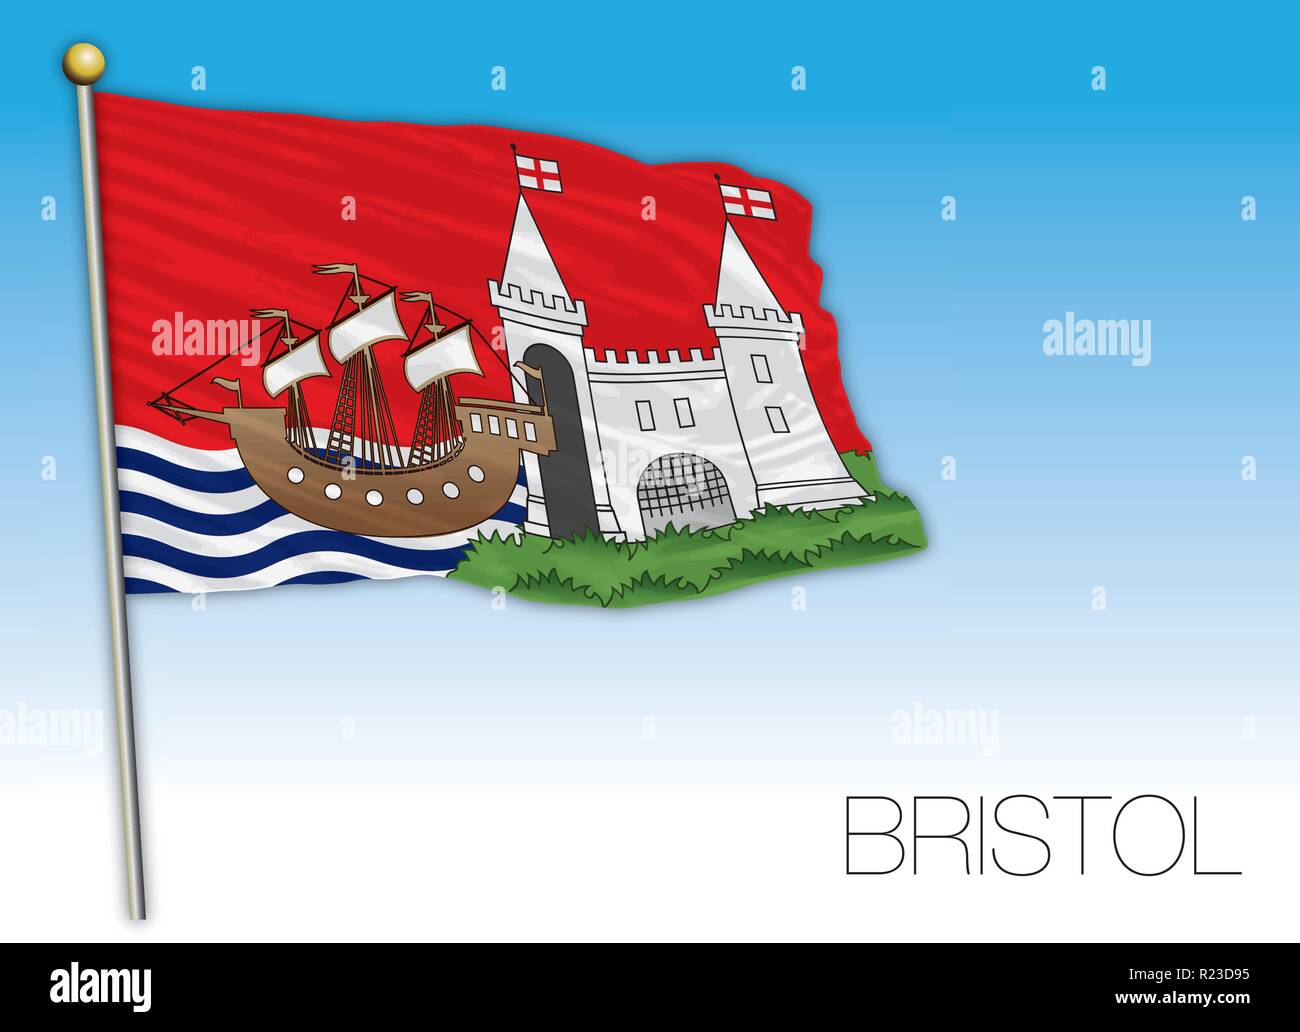 Bristol County flag, Vereinigtes Königreich, Vektor, Abbildung Stock Vektor